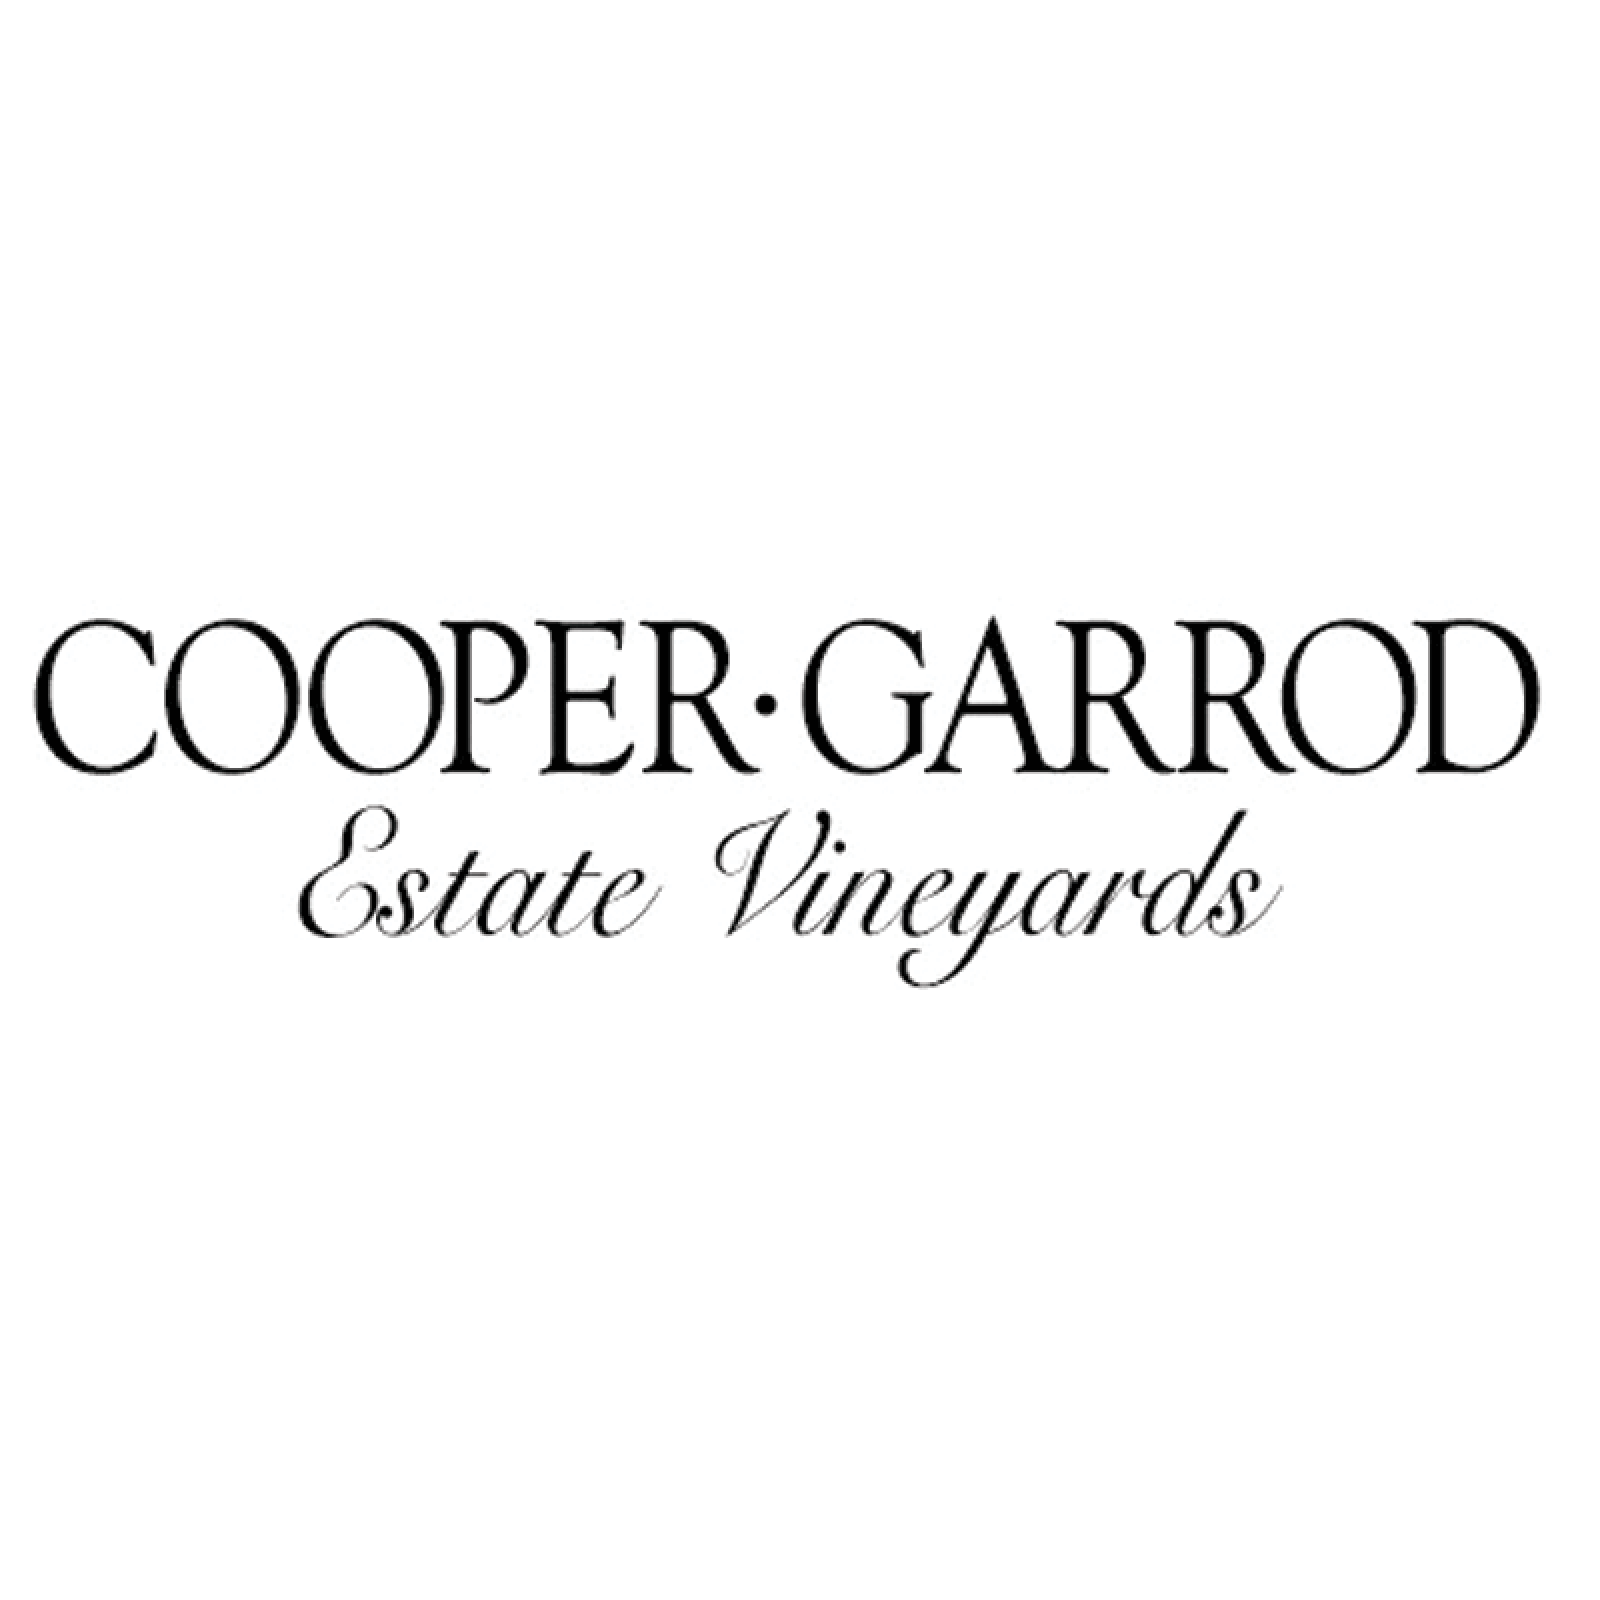 Cooper Garrod F104 Test Pilot 2019 Wine Label 